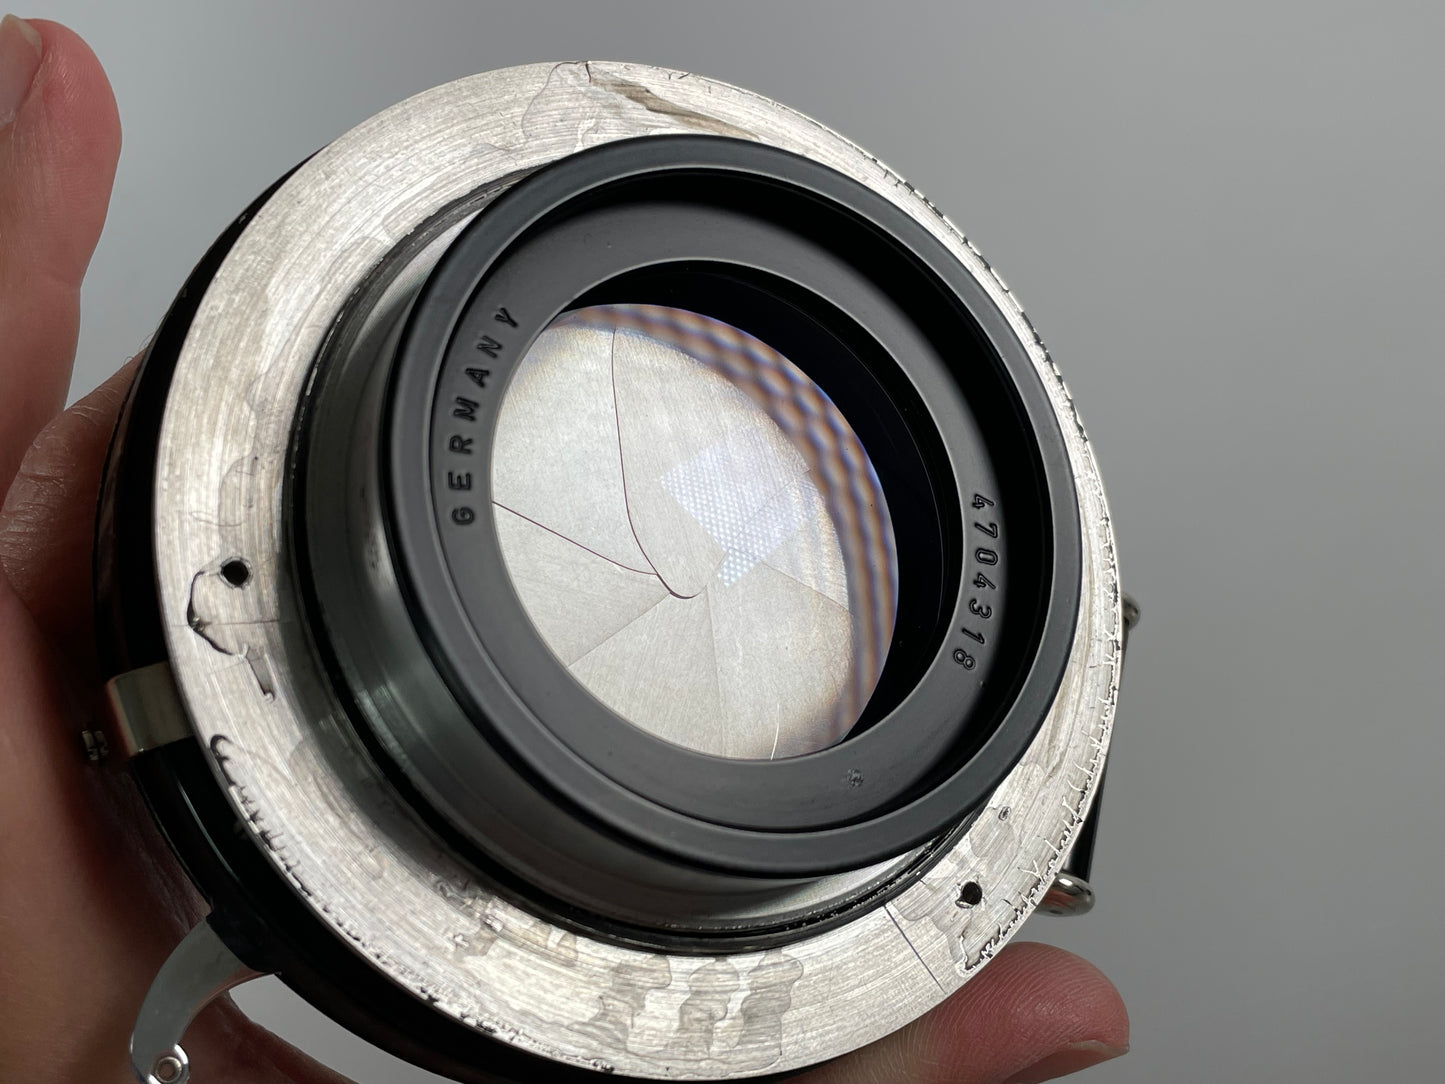 Voigtlander Heliar 24cm 240mm f4.5 Technika large format lens with compound shutter